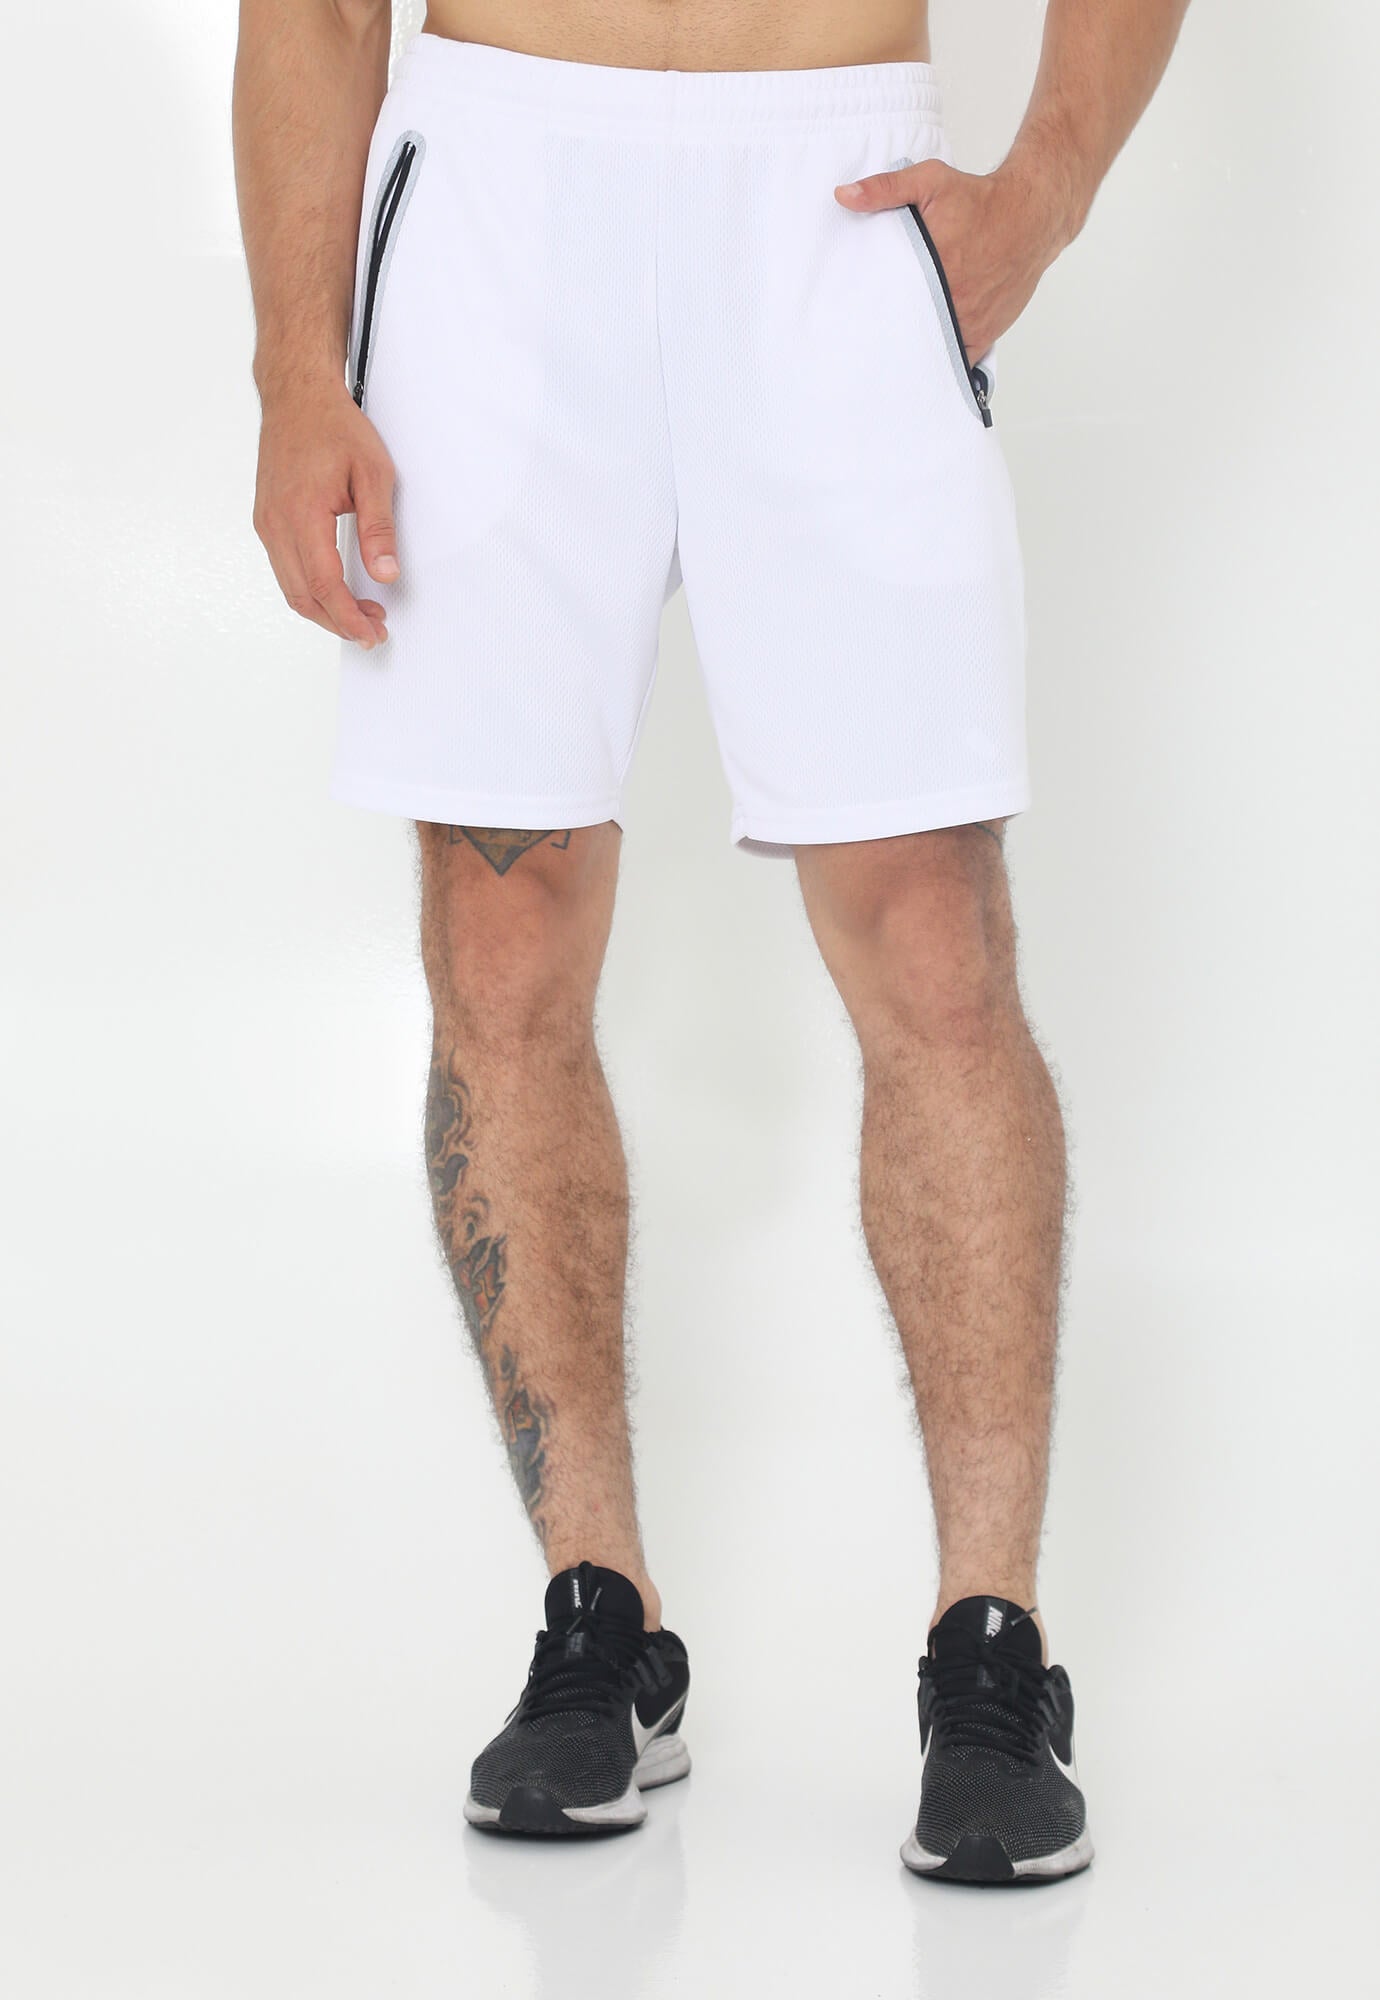 Pantaloneta Deportiva Blanca Con Detalle Reflectivo En Los Bolsillos Para Hombre